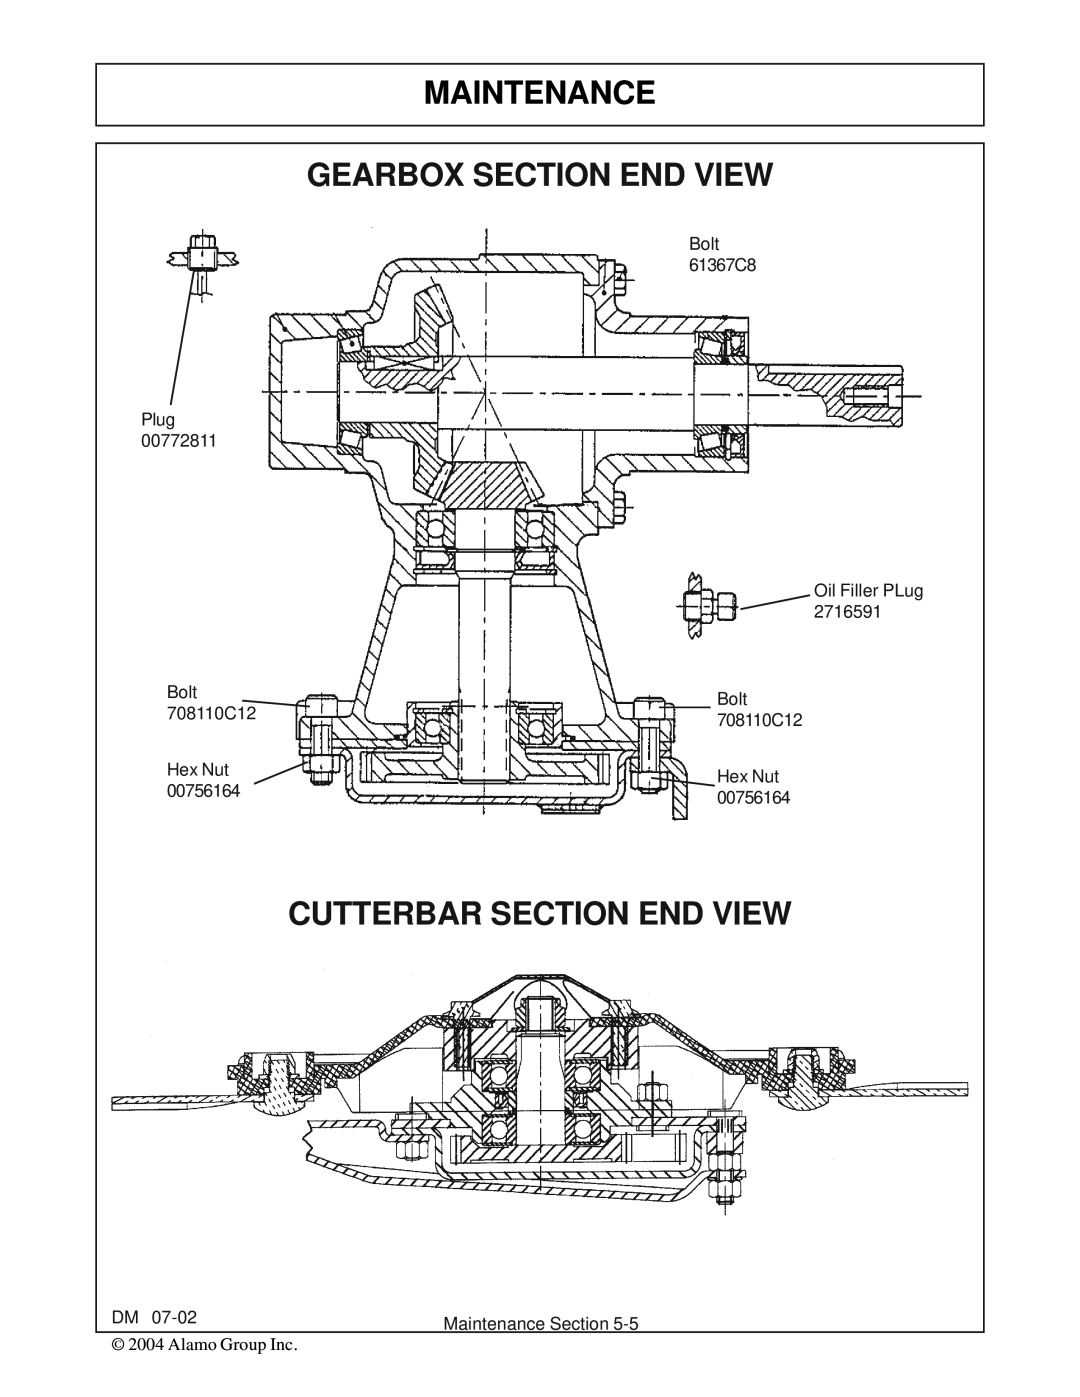 Servis-Rhino DM124, DM82, DM95, DM112 manual Maintenance Gearbox Section End View, Cutterbar Section End View 